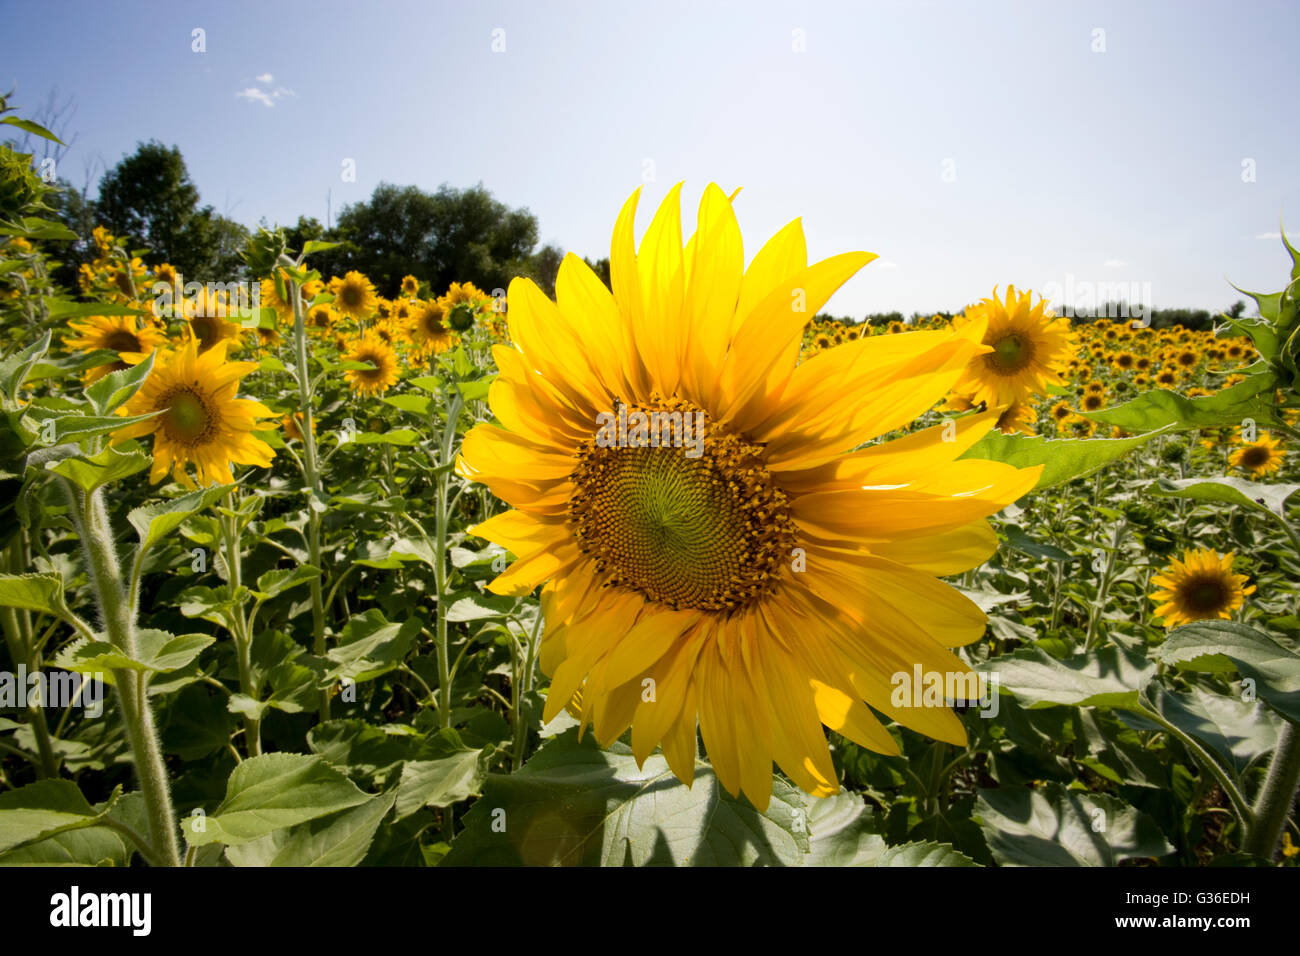 North America Canada Ontario field of Sunflowers close up Stock Photo